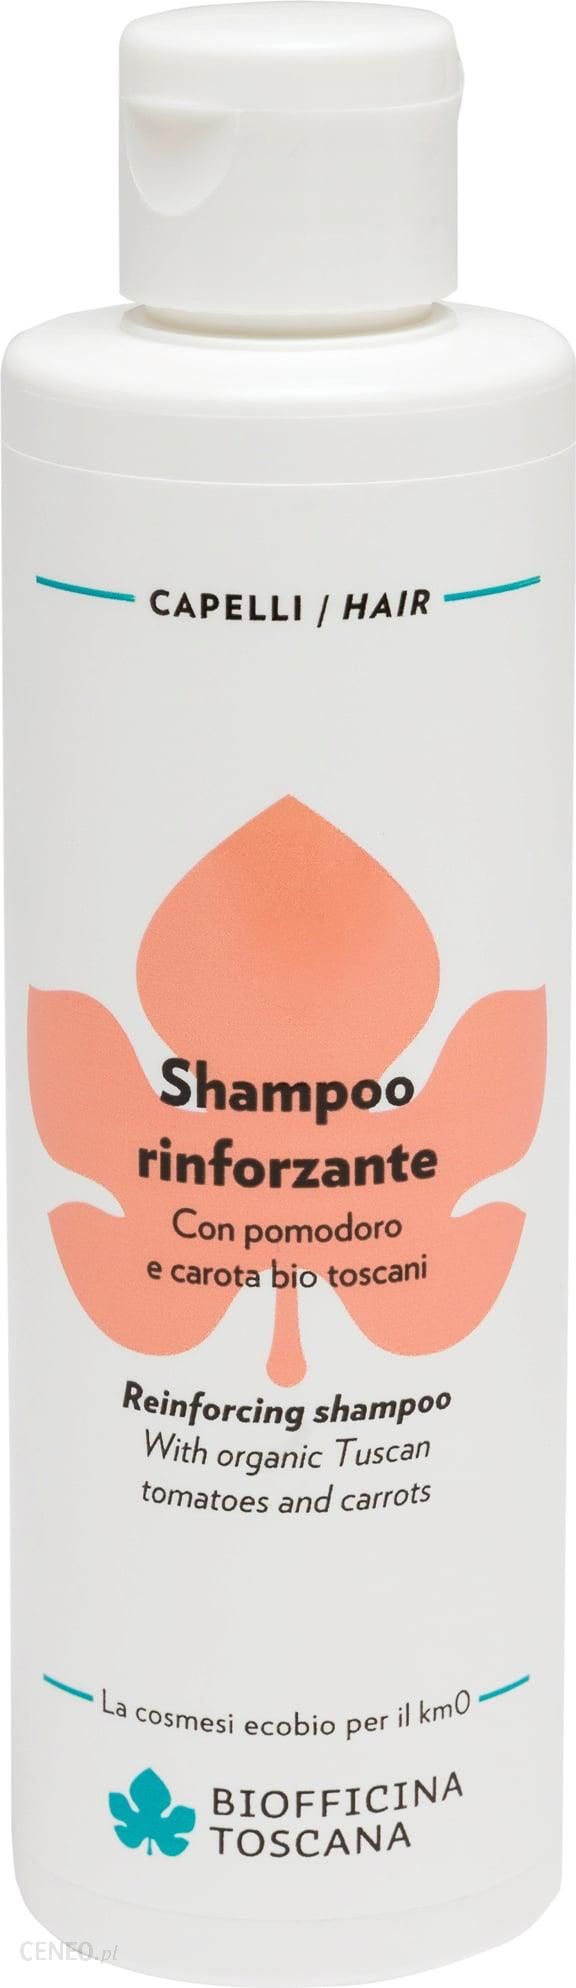 biofficina toscana szampon